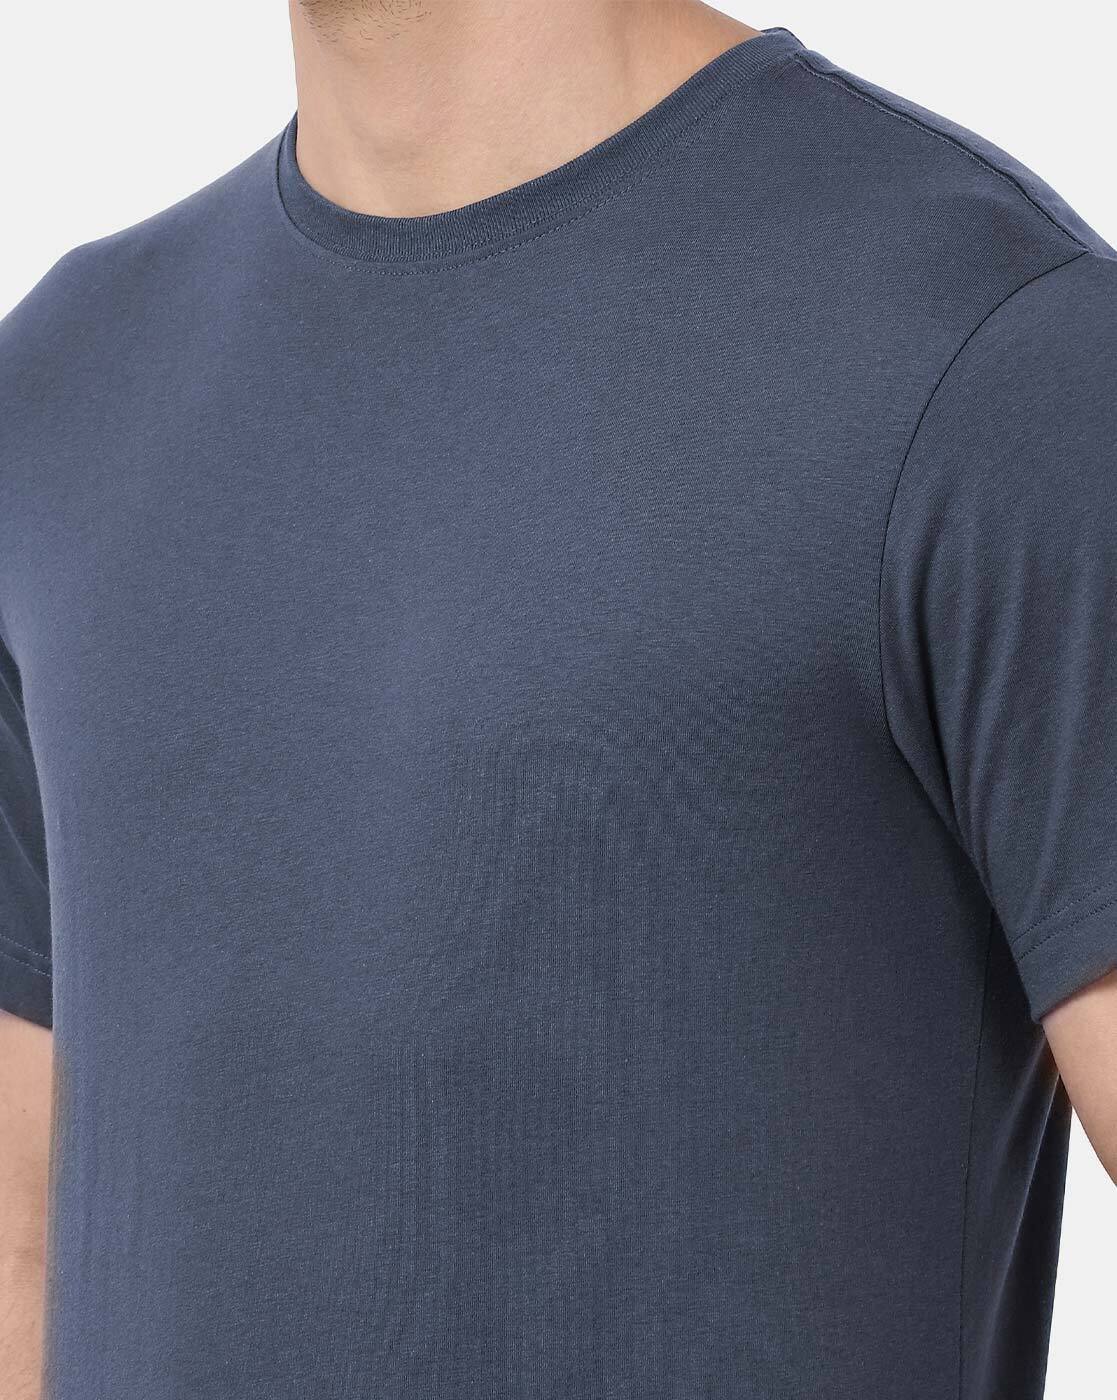 Buy Navy Blue Tshirts for Men by JOCKEY Online